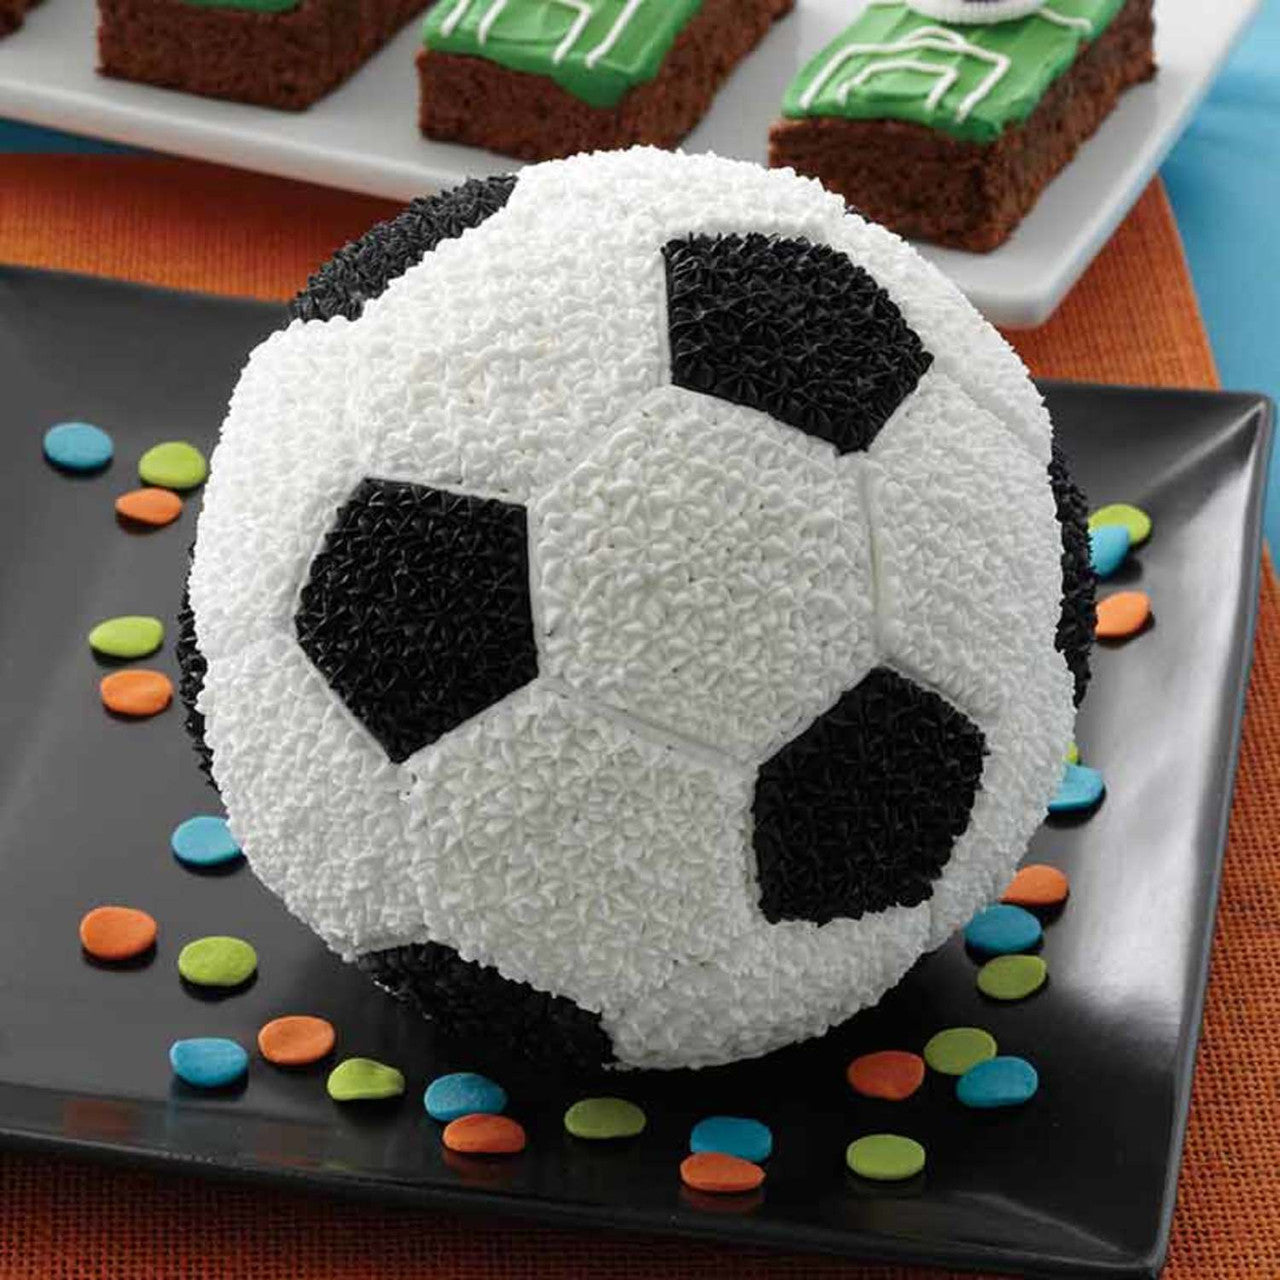 Wilton 'Football' Novelty Cake Pan